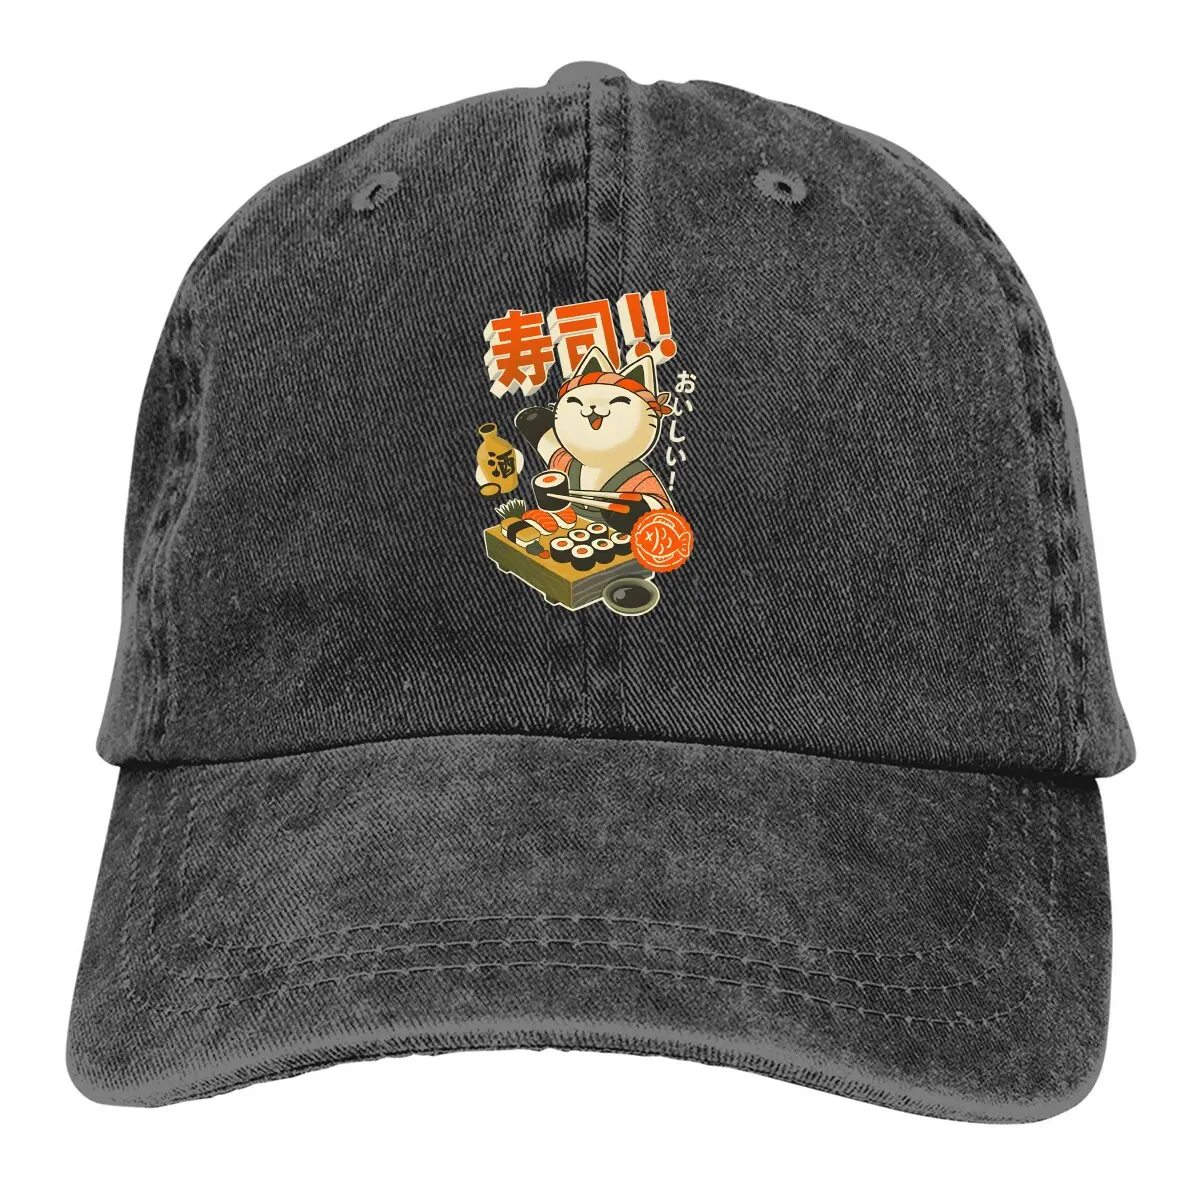 

Sushi Chef Cat - Restaurant Kitty - Japanese Food Baseball Caps Peaked Cap Cats Sun Shade Hats for Men Women